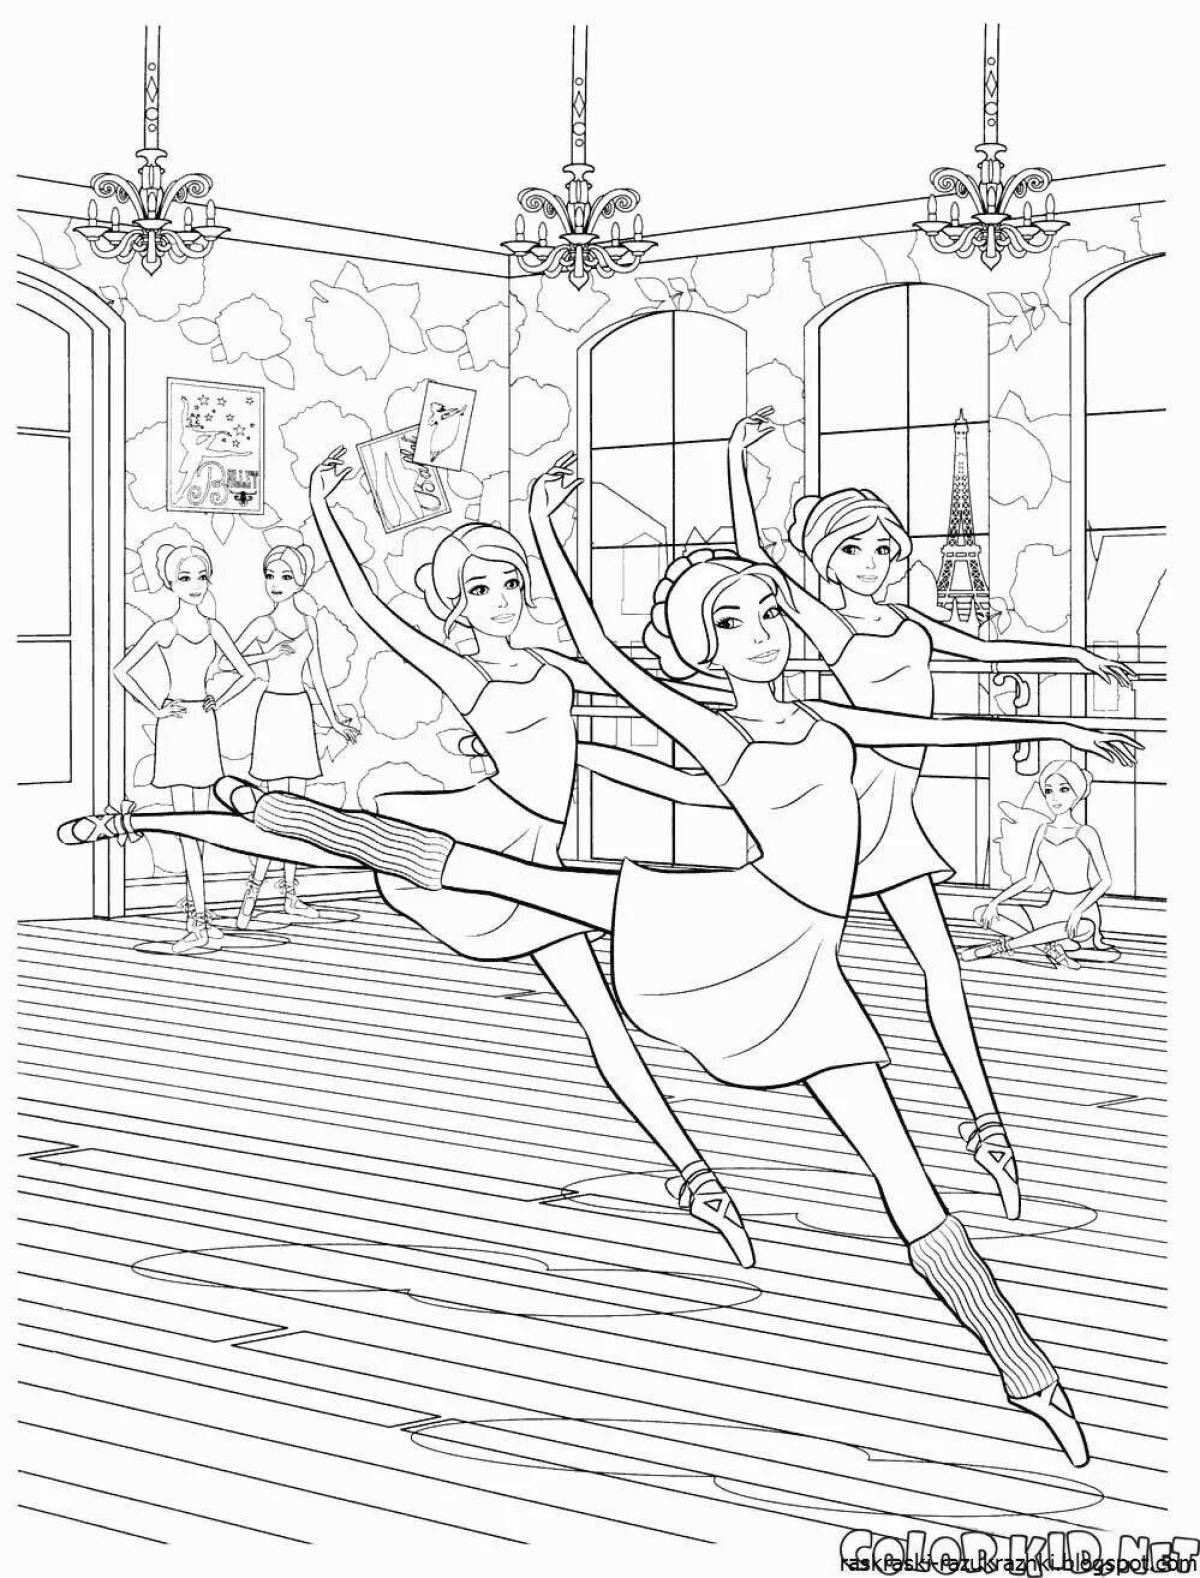 Coloring book shining ballerina for girls